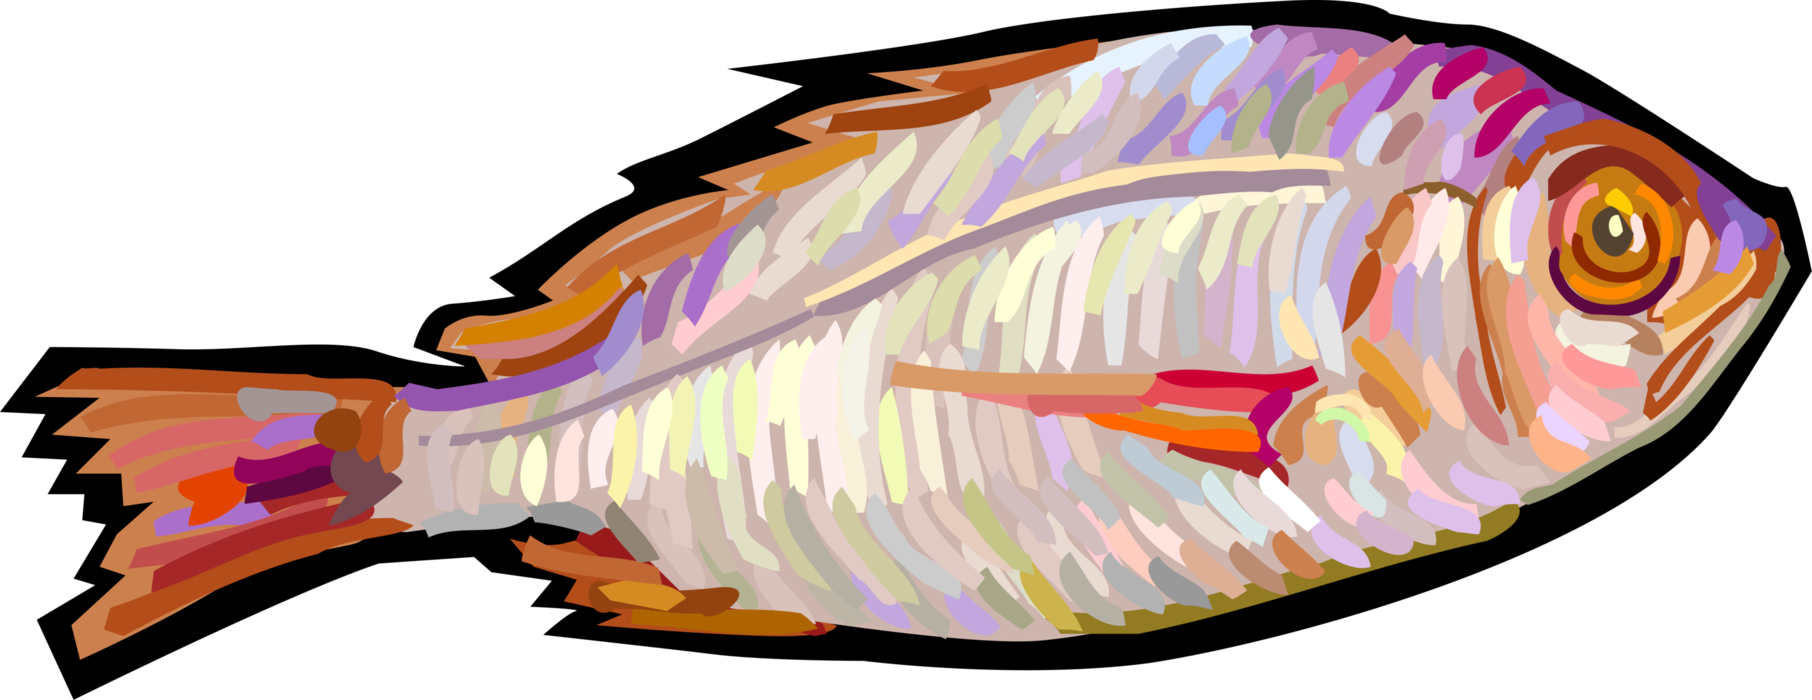 Vector Illustration of Aquatic Marine Red Snapper Fish